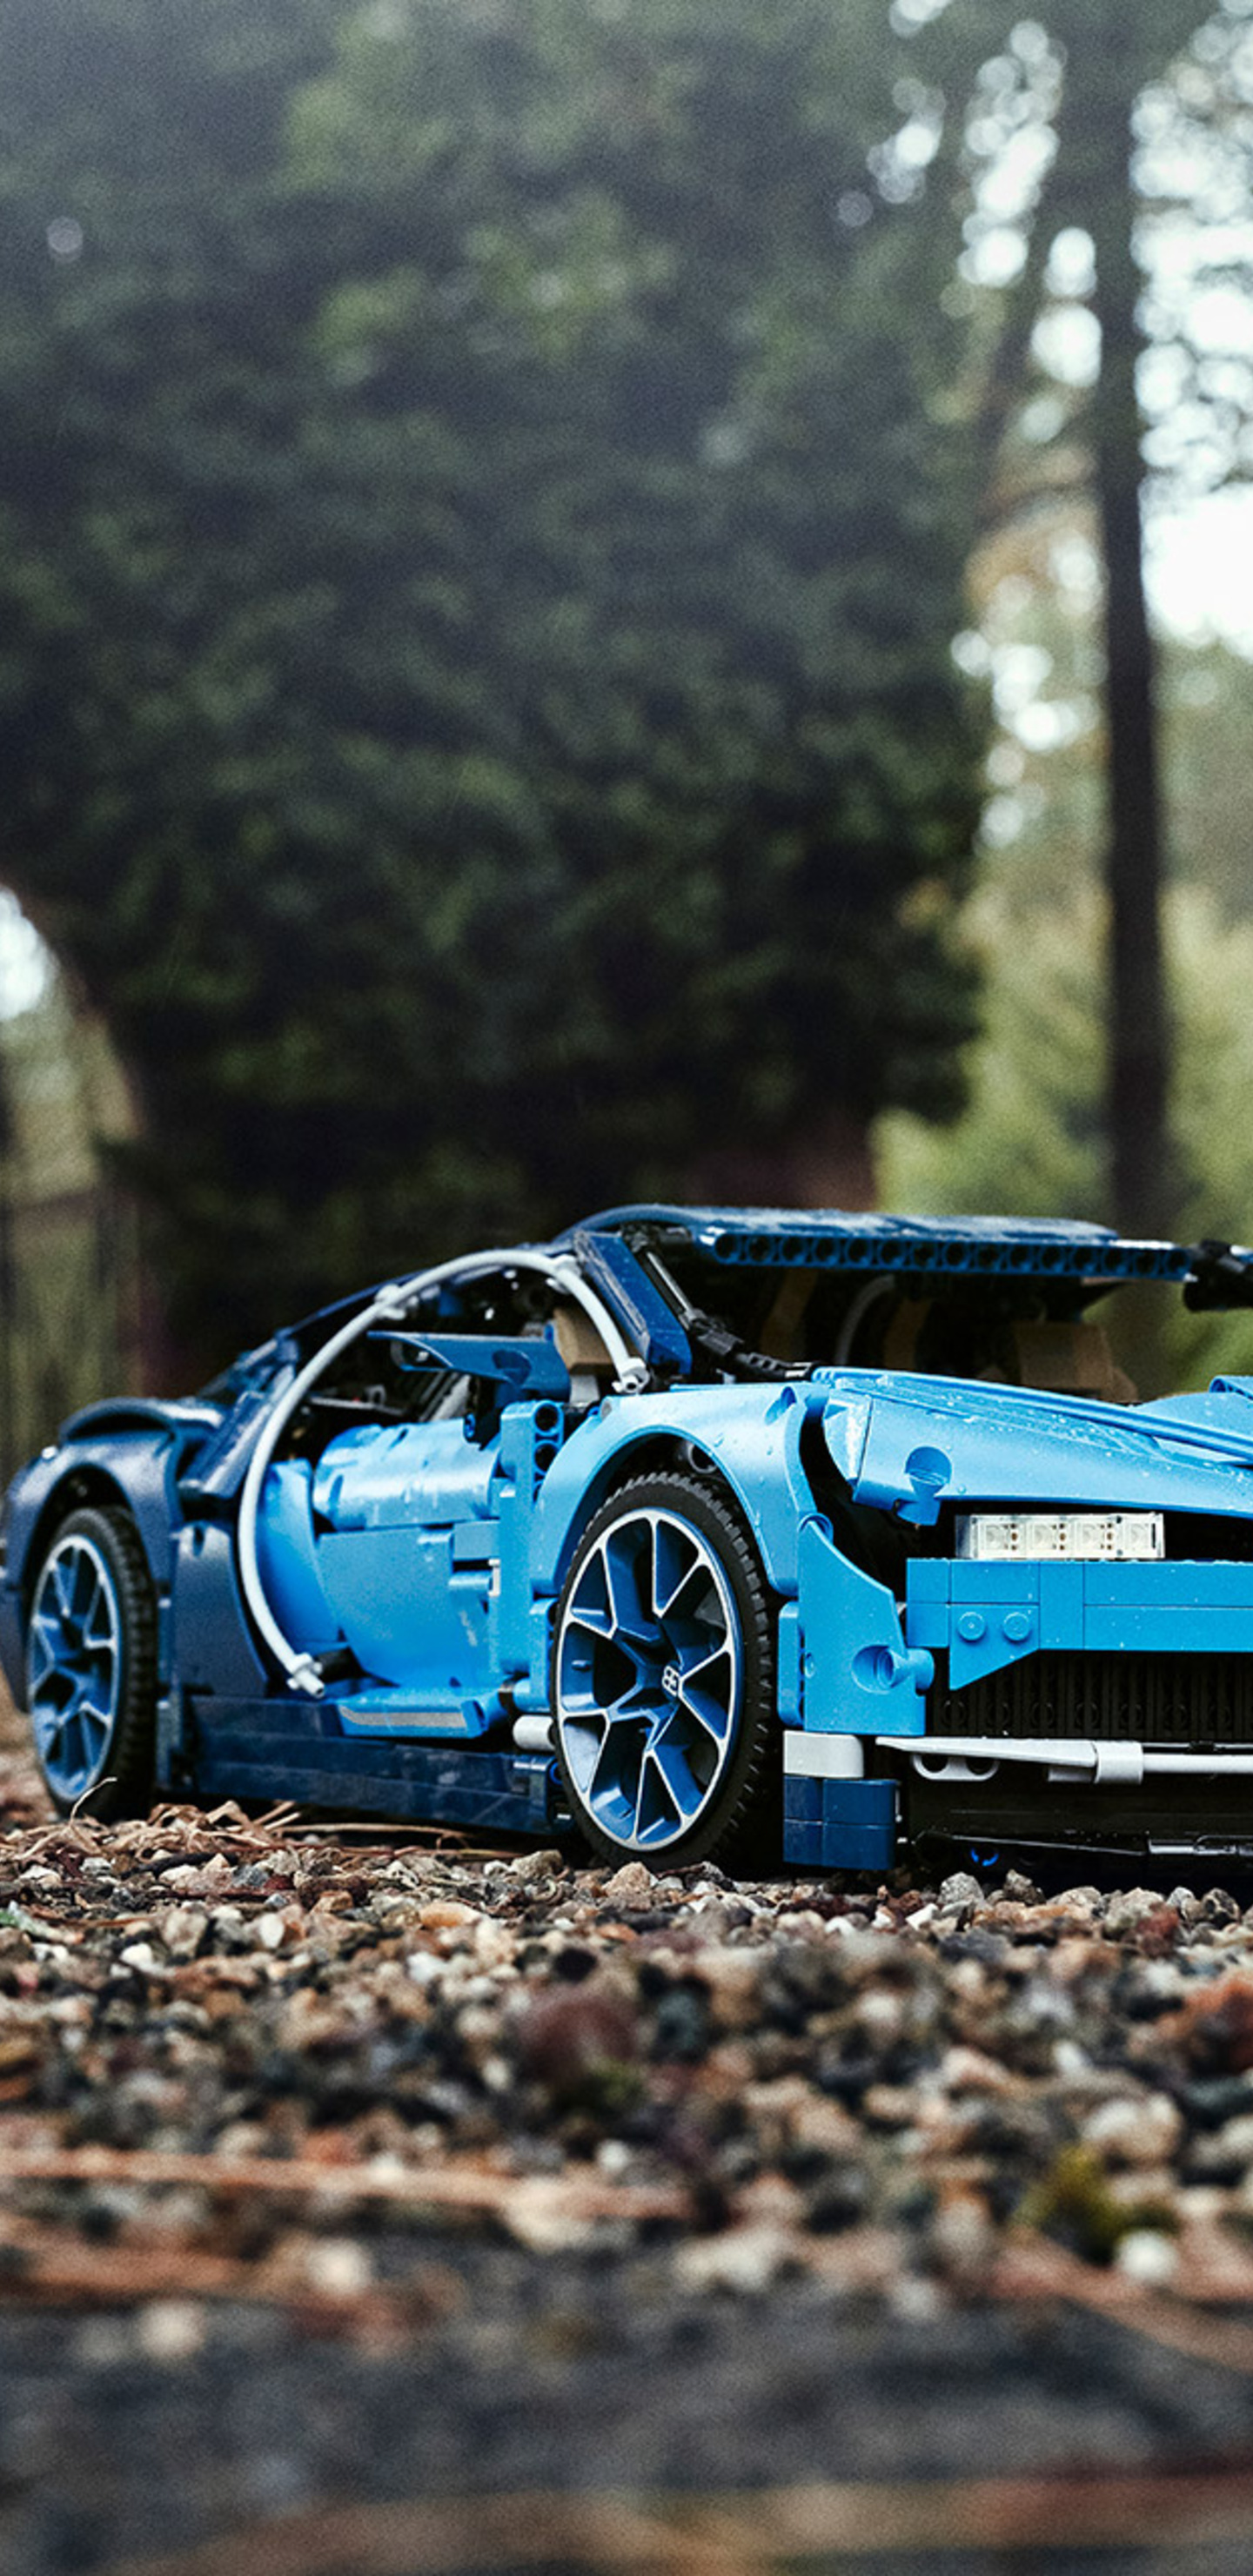 Lego Bugatti Chiron Sport Samsung Galaxy Note S S SQHD HD 4k Wallpaper, Image, Background, Photo and Picture